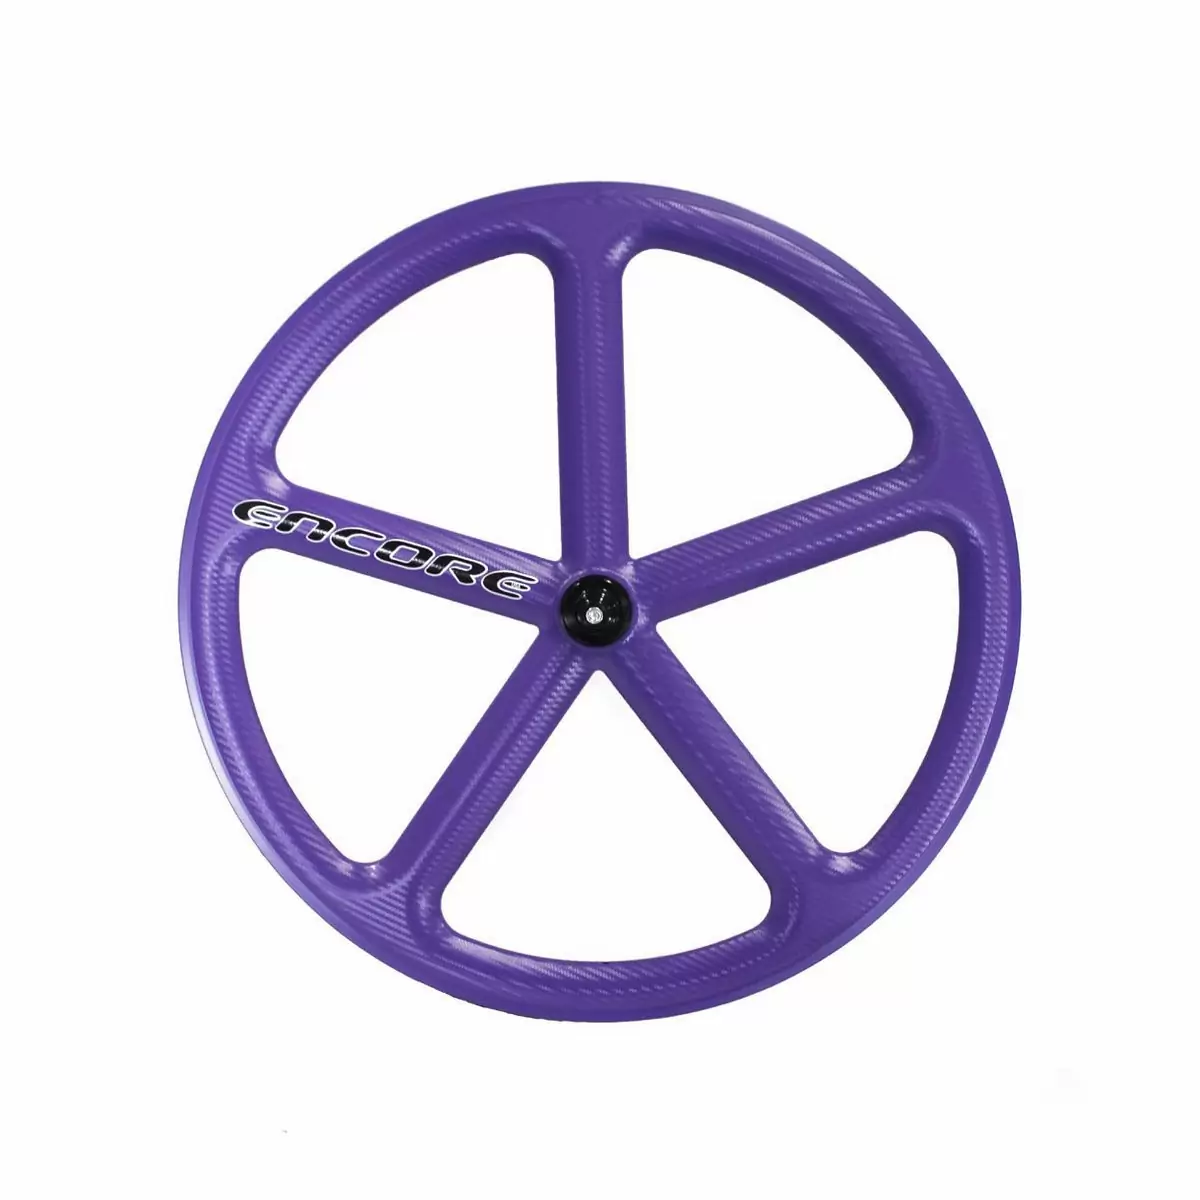 rear wheel 700c track 5 spokes carbon weave purple nmsw - image